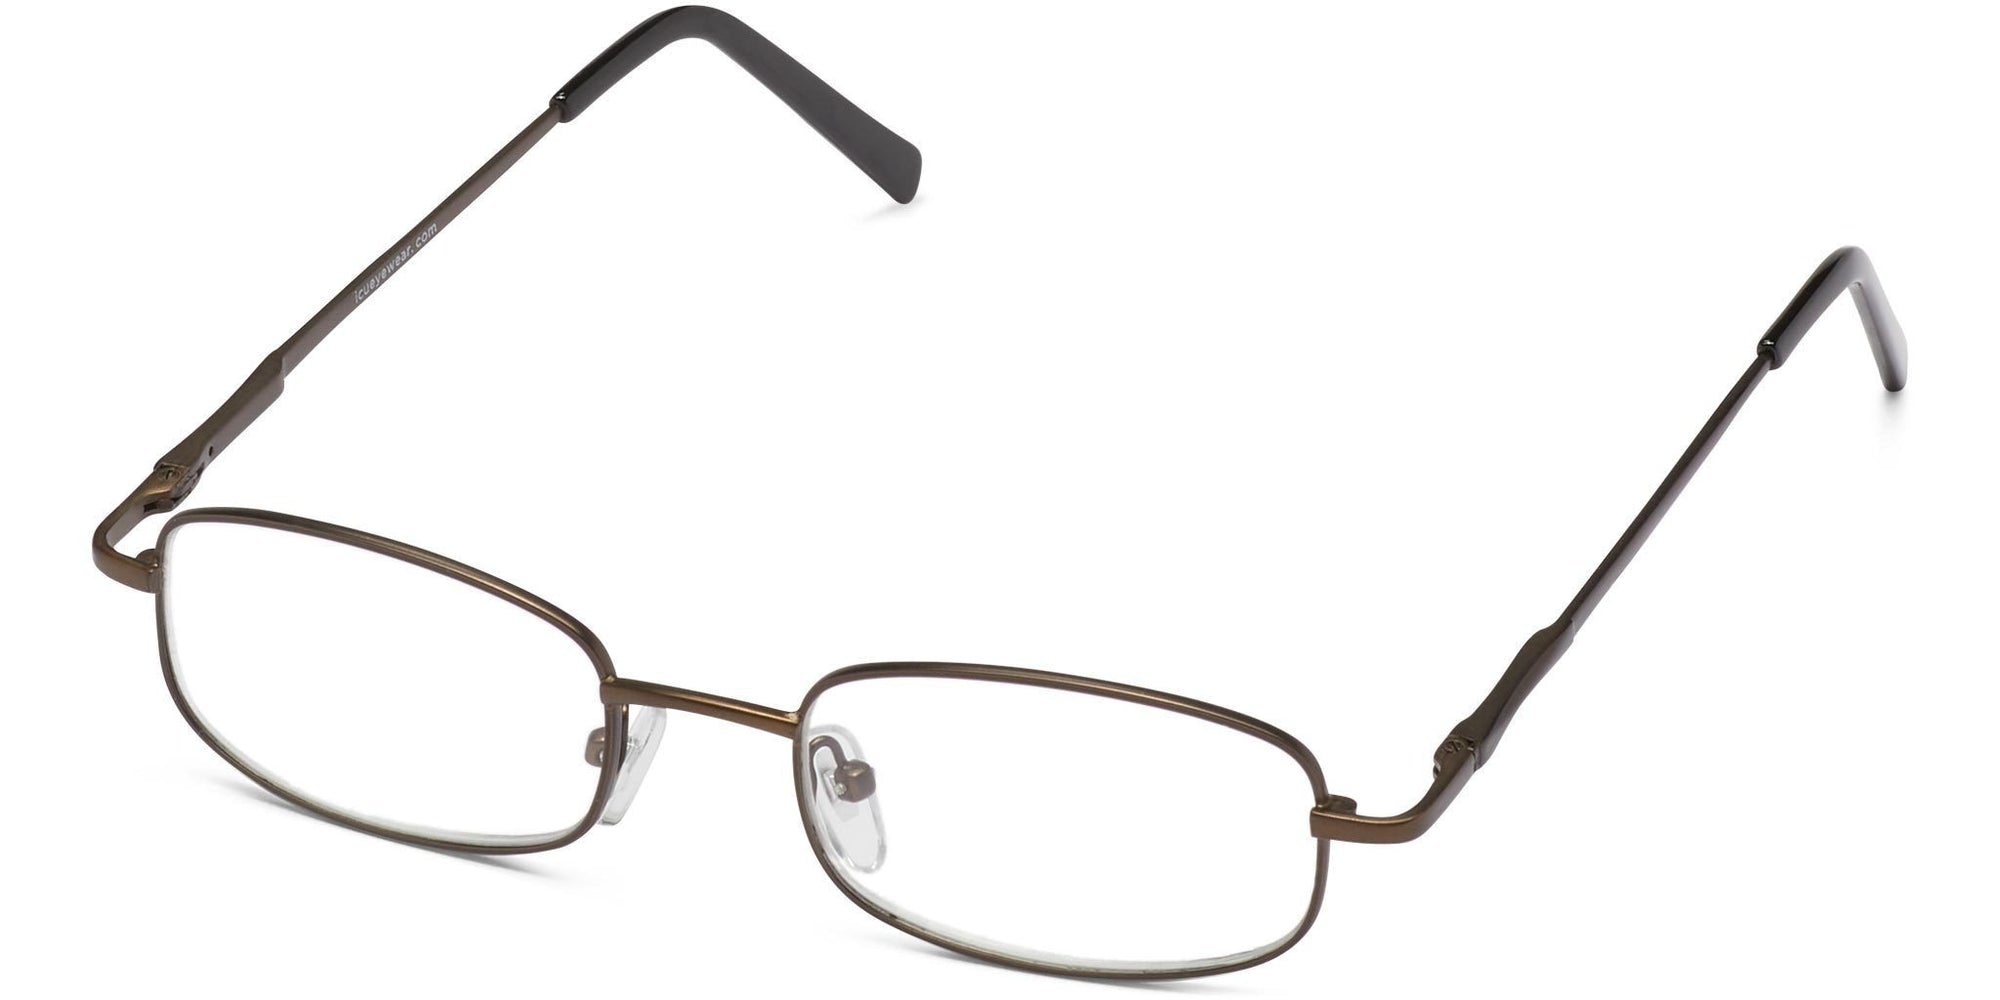 Mendocino - Gunmetal / 1.25 - Reading Glasses